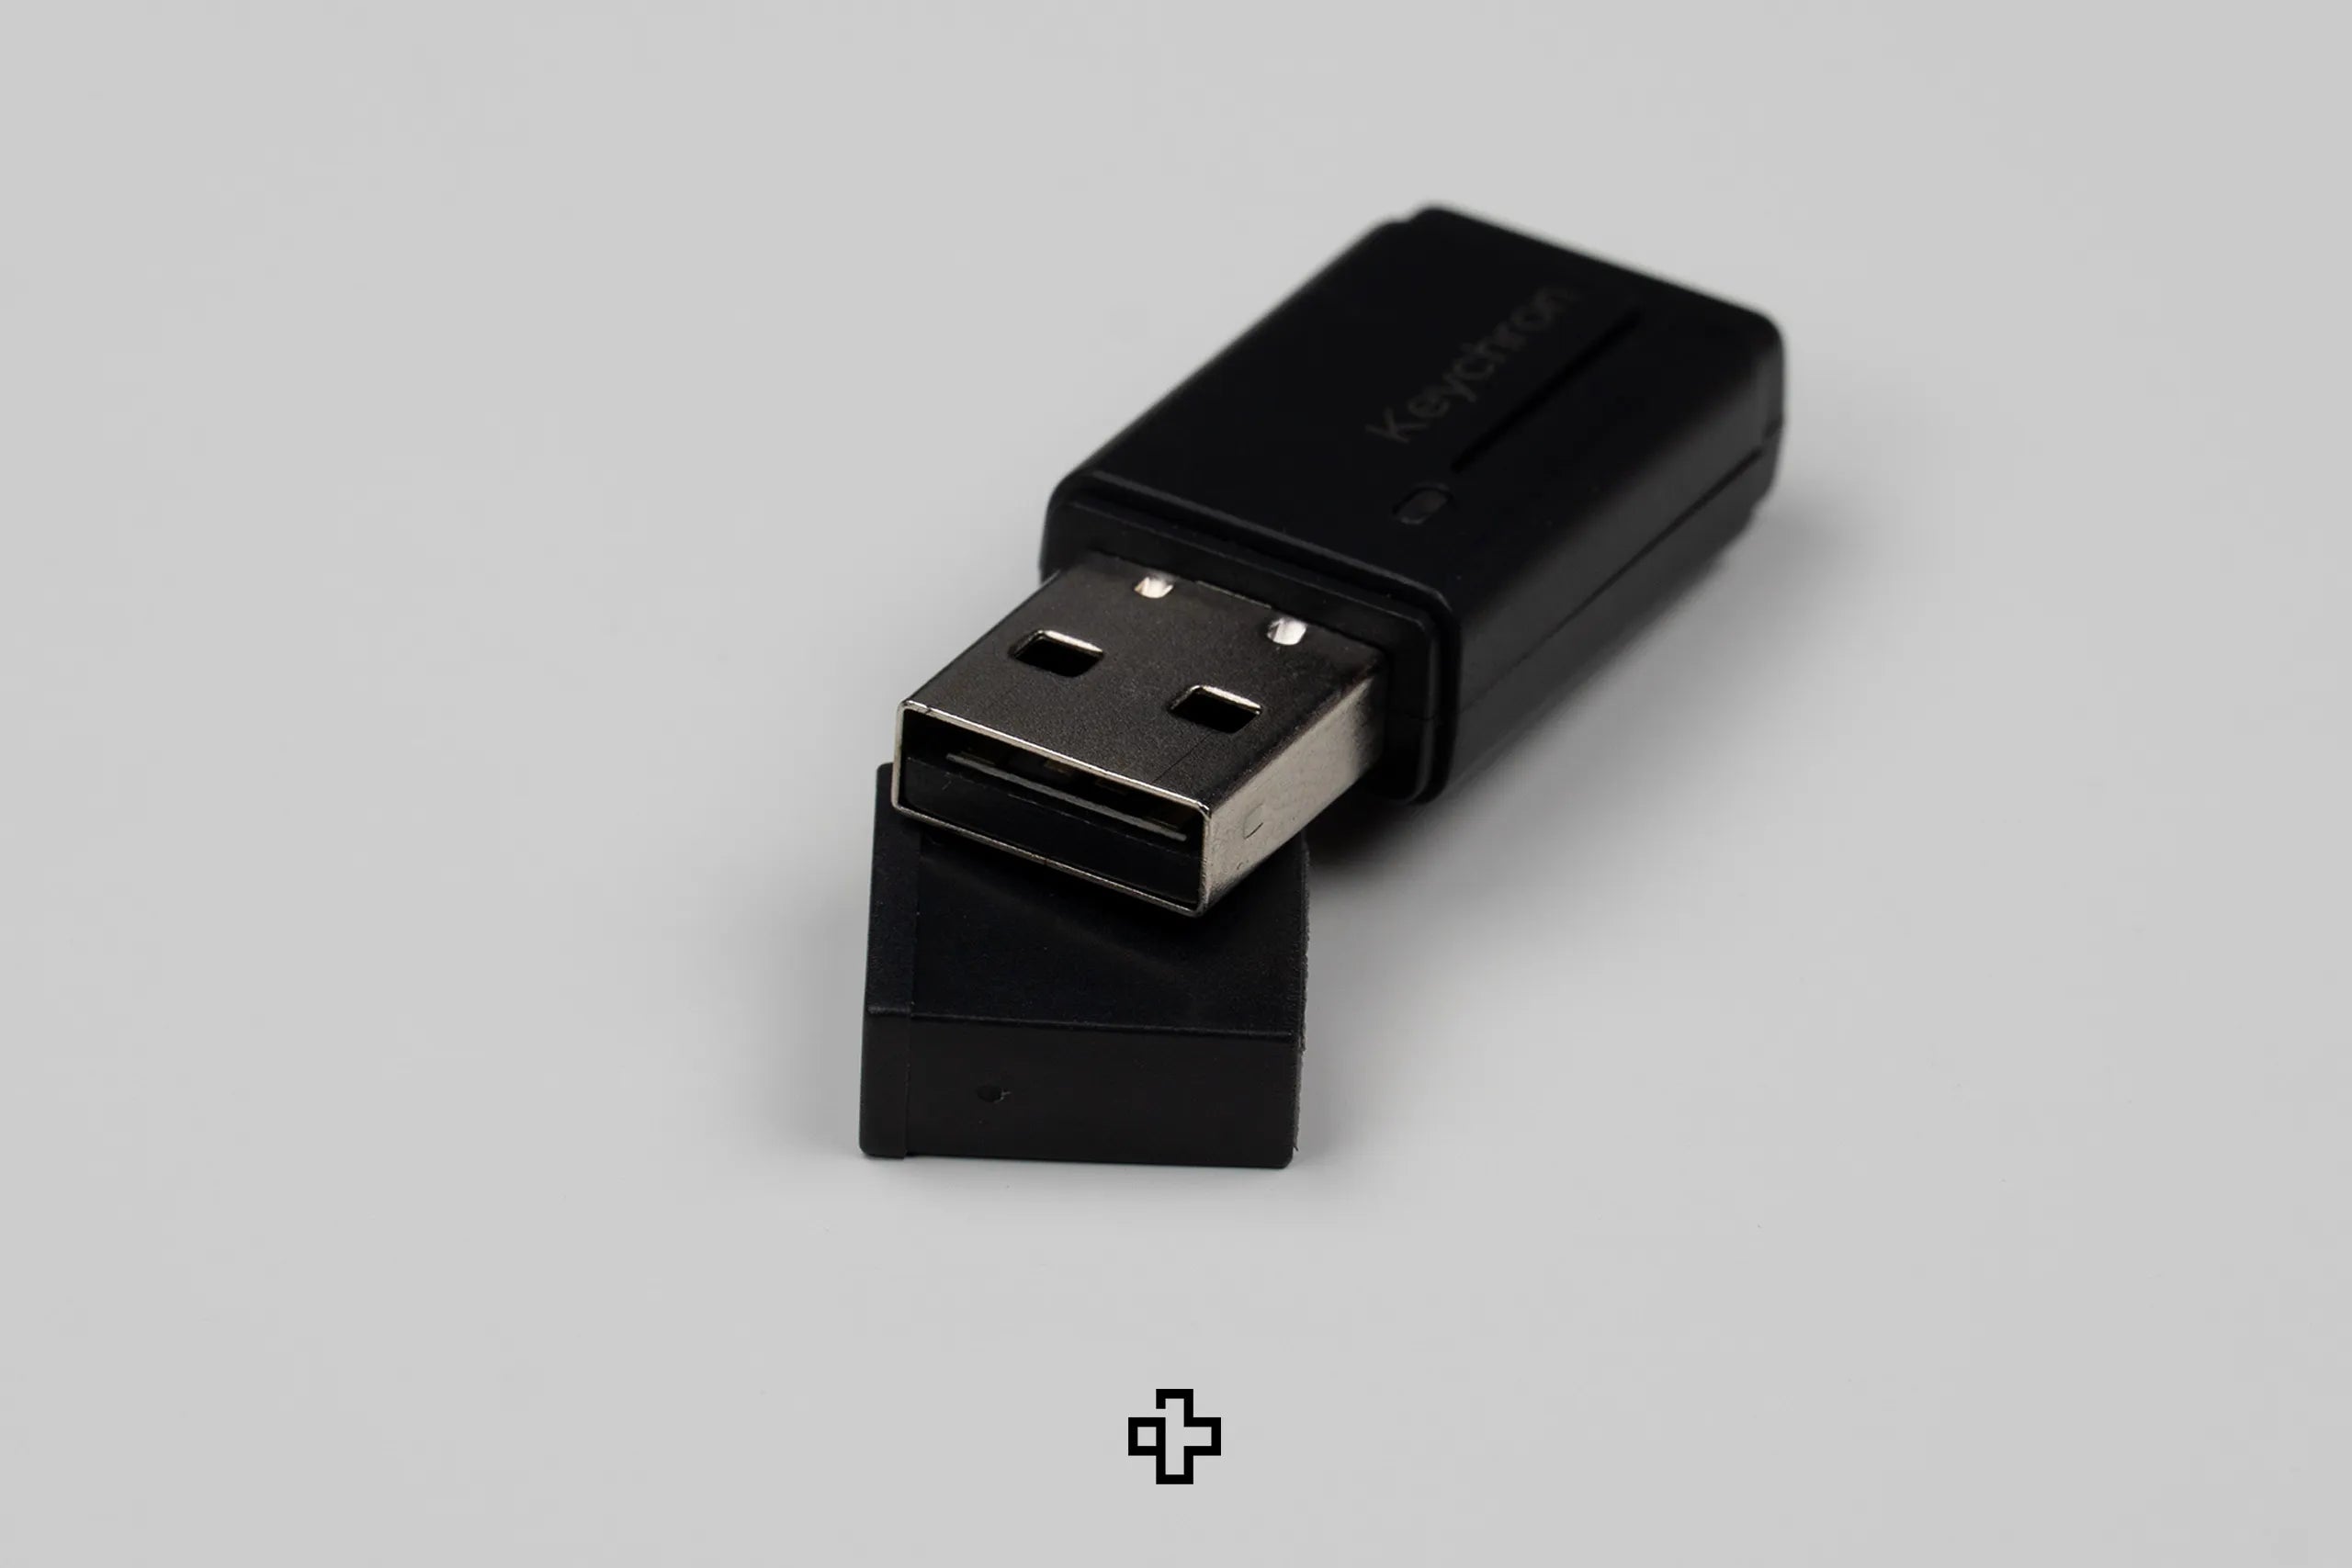 Keychron USB Bluetooth-adapter voor Windows 5.0